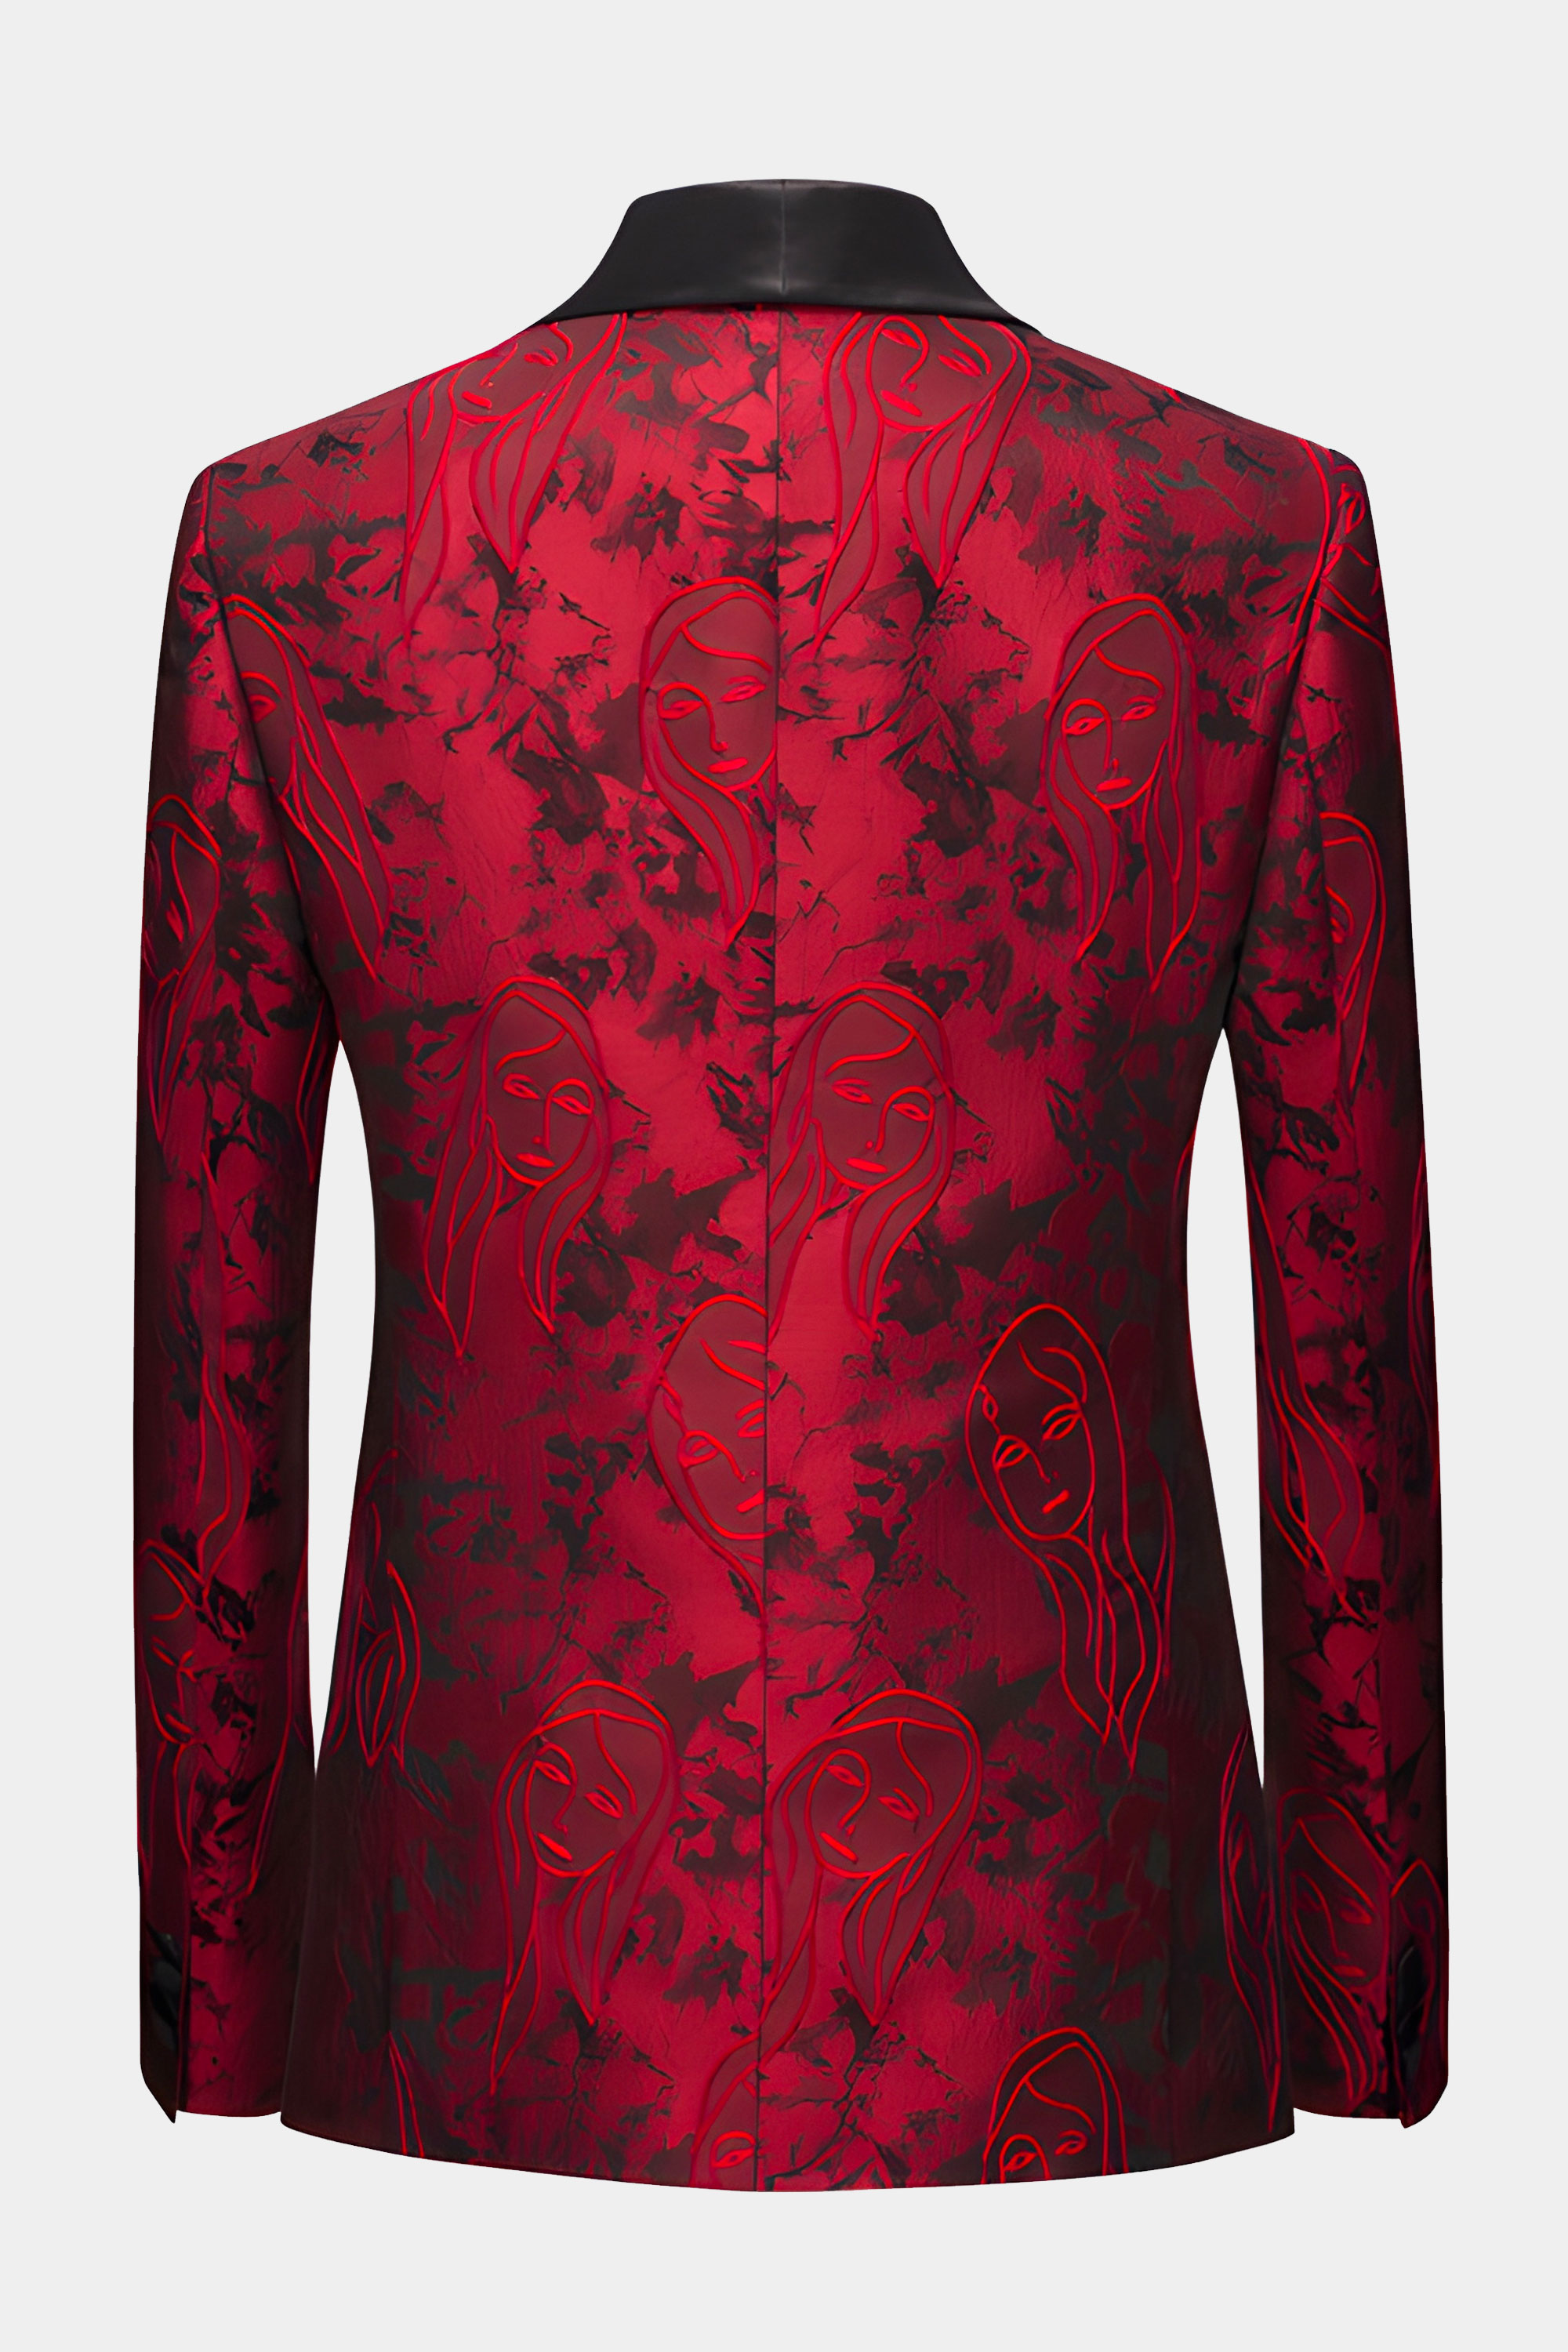 Bloodred-Burgundy-tuxedo-Jacket-from-Gentlemansguru.com